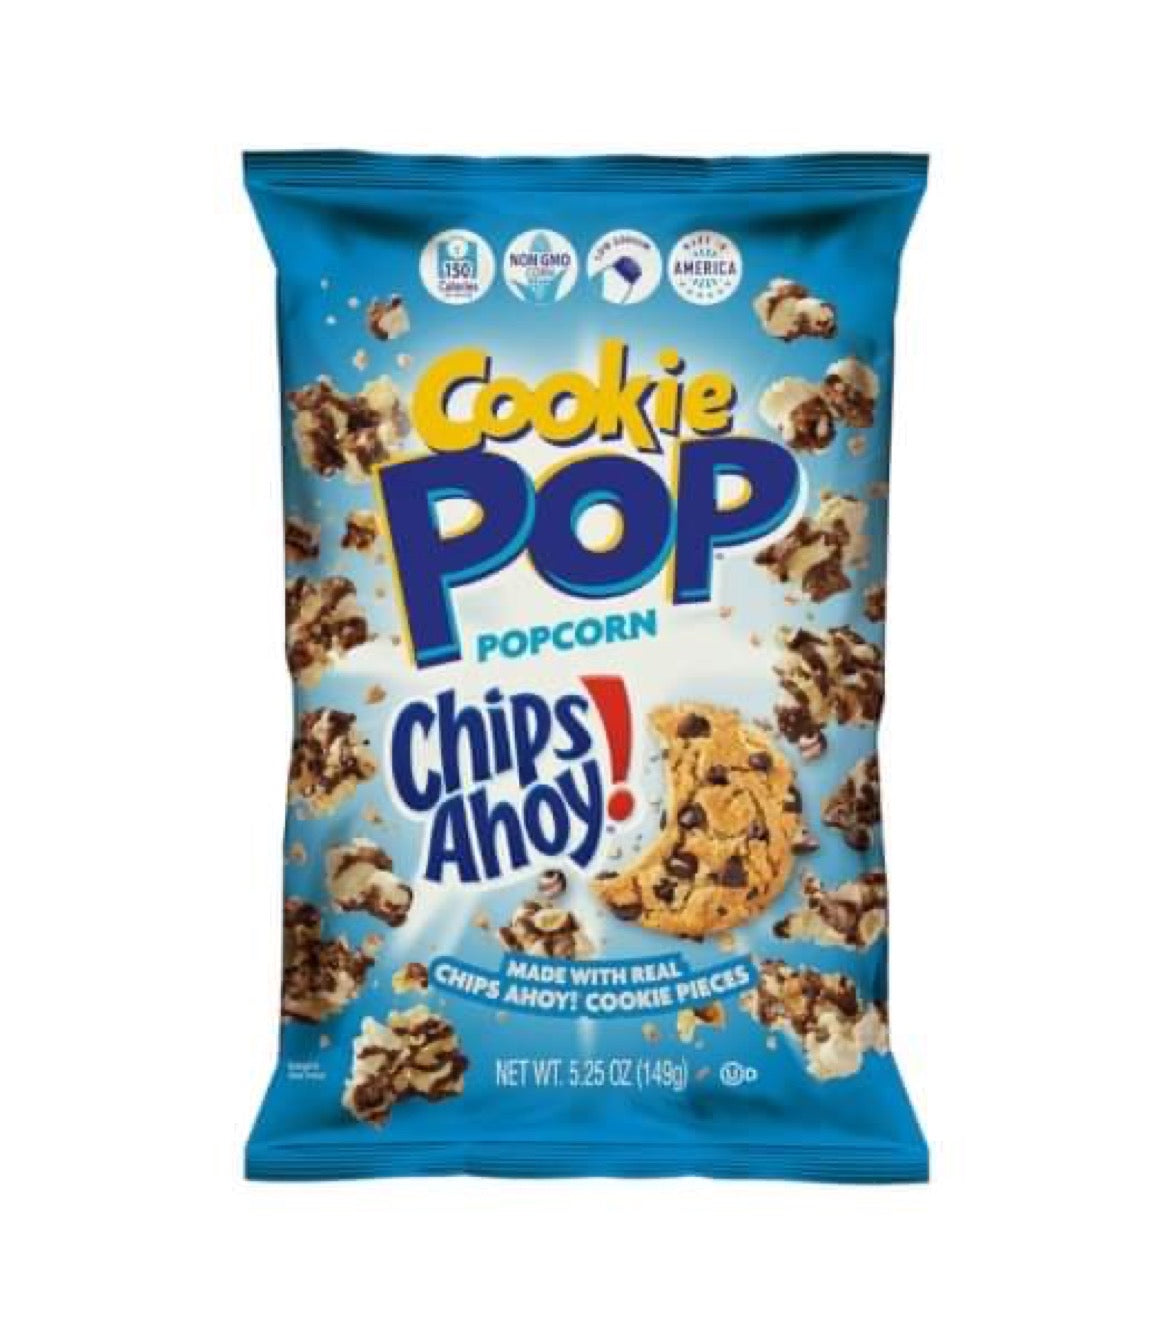 Cookie Pop Popcorn Chips Ahoy (149g)